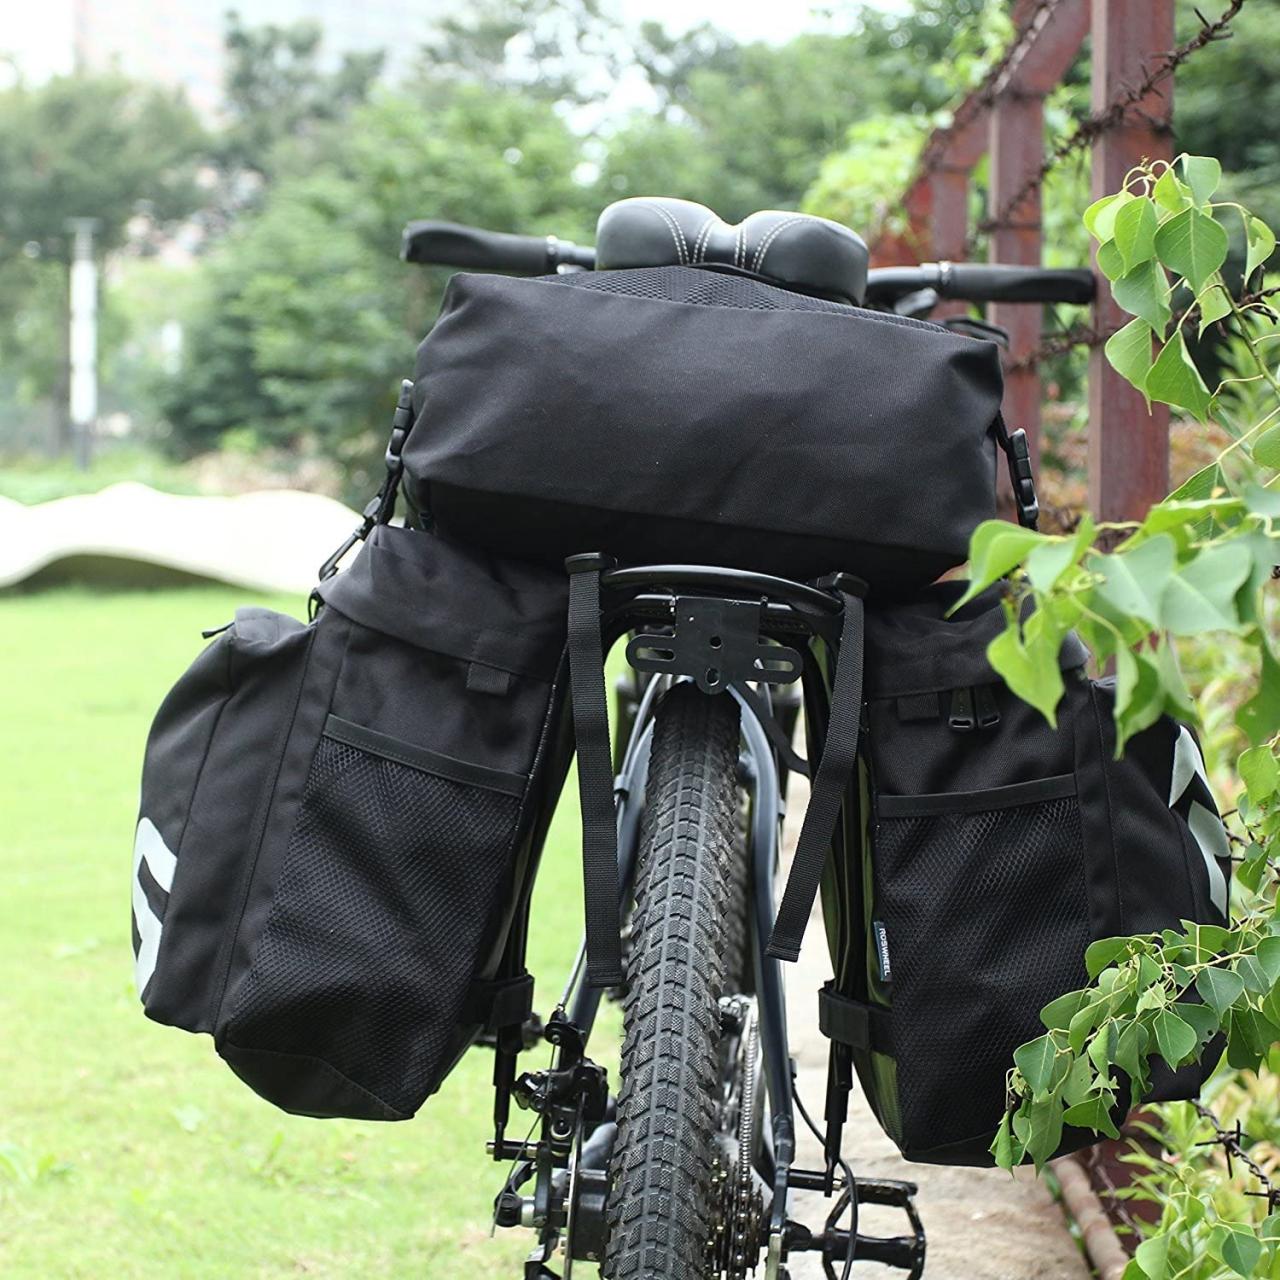 Buy Roswheel Bike Bag Bike Pannier Bag Bike Trunk Bag Waterproof, Bicycle  Rear Rack Bag with Rain Cover for Cycling Online in Hong Kong. B078T9LXSH